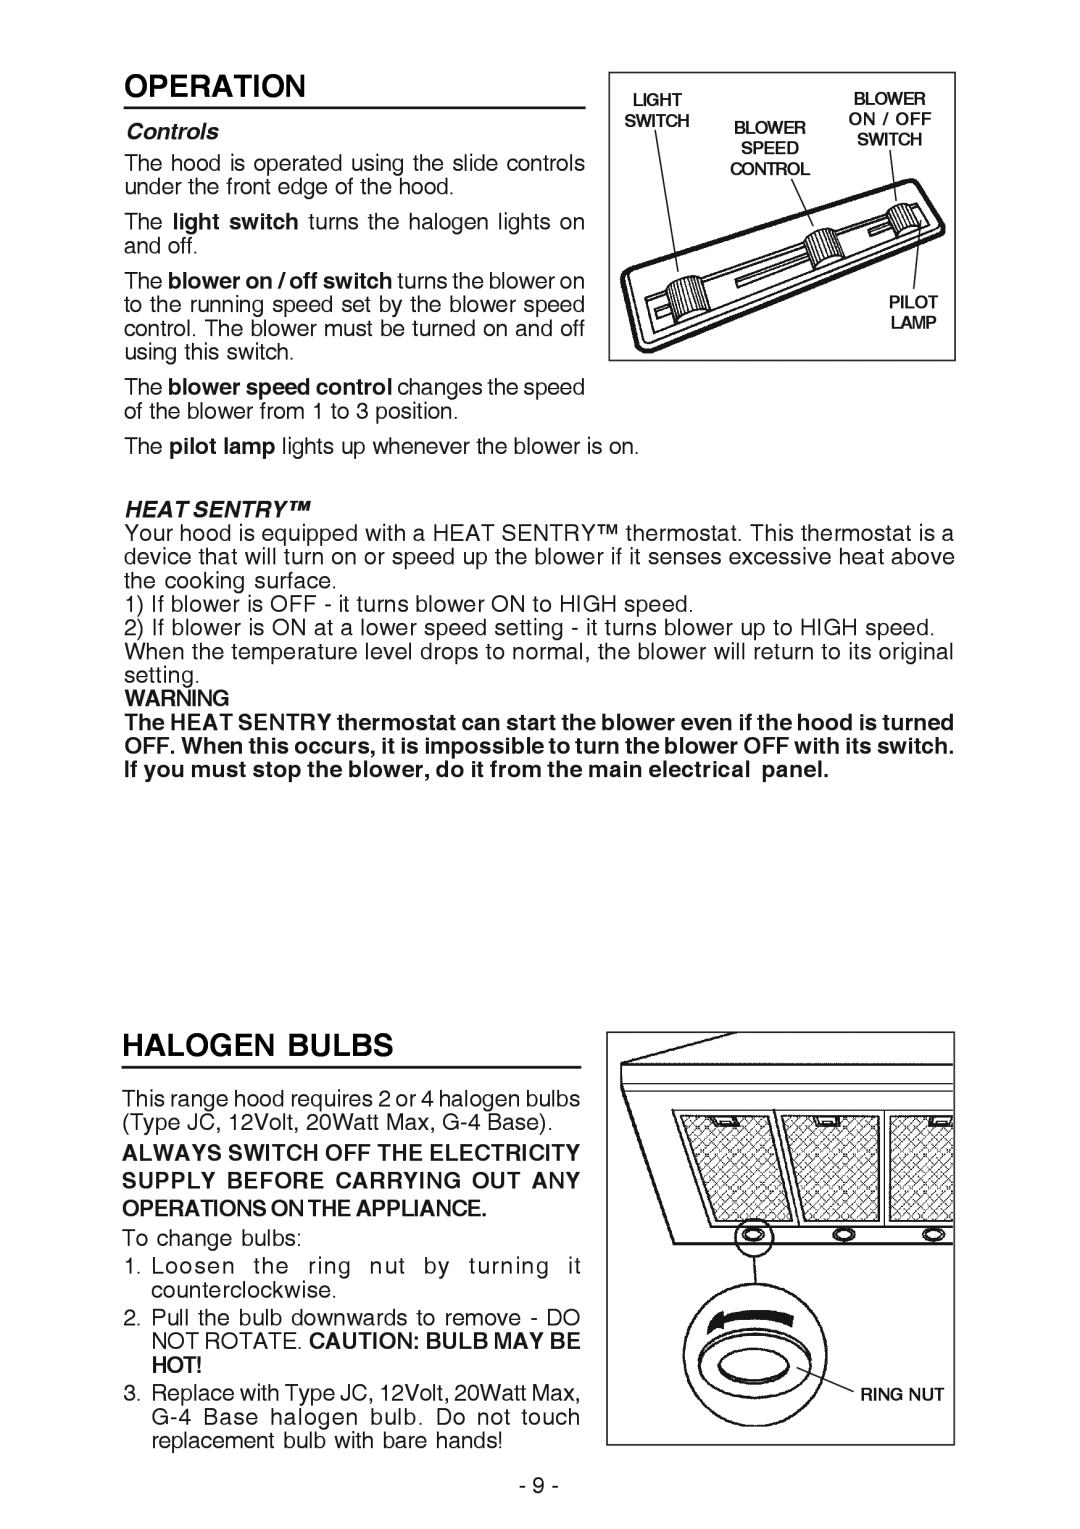 Broan 619004EX manual Operation, Halogen Bulbs, Controls, Heat Sentry 